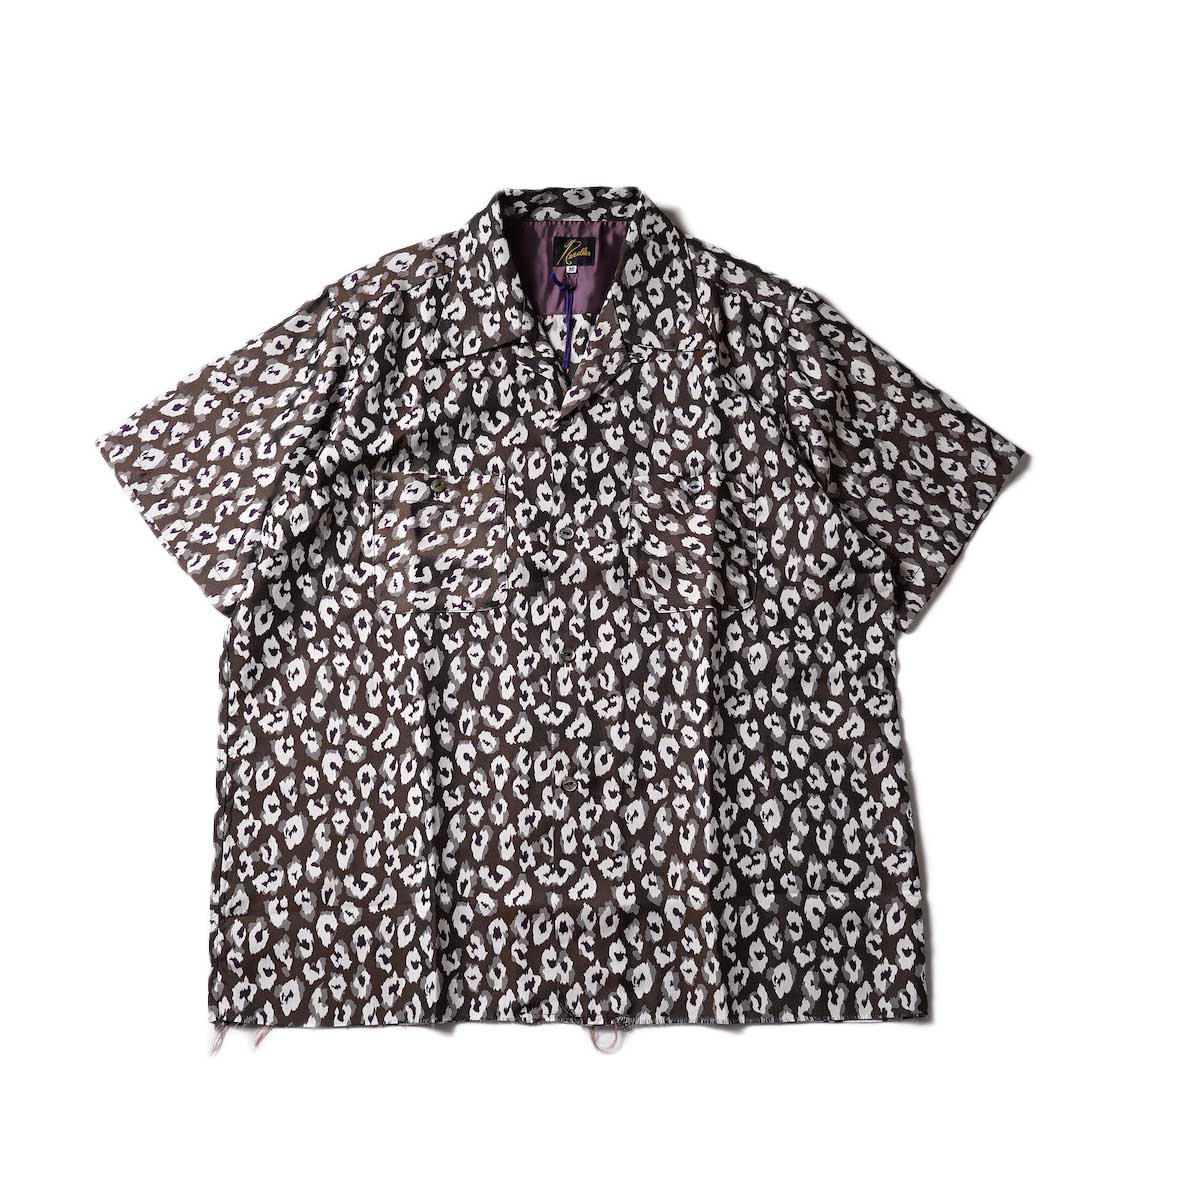 Needles / C.O.B. S/S Classic Shirt - Jacqard (Leopard)